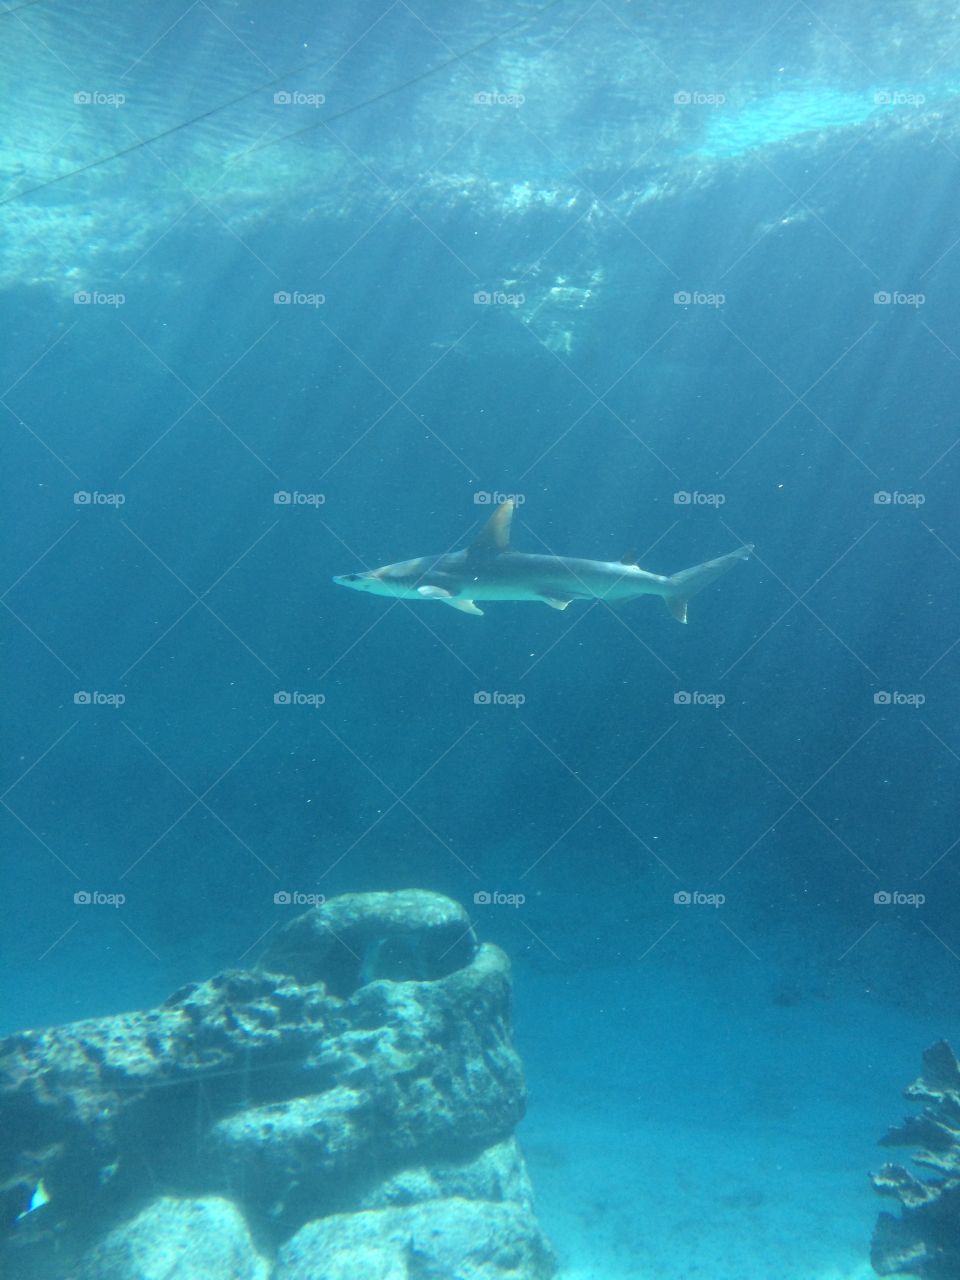 Just keep on swimming 😃

Underwater adventure with a baby shark

Atlantis paradise resort
Bahamas Nassau